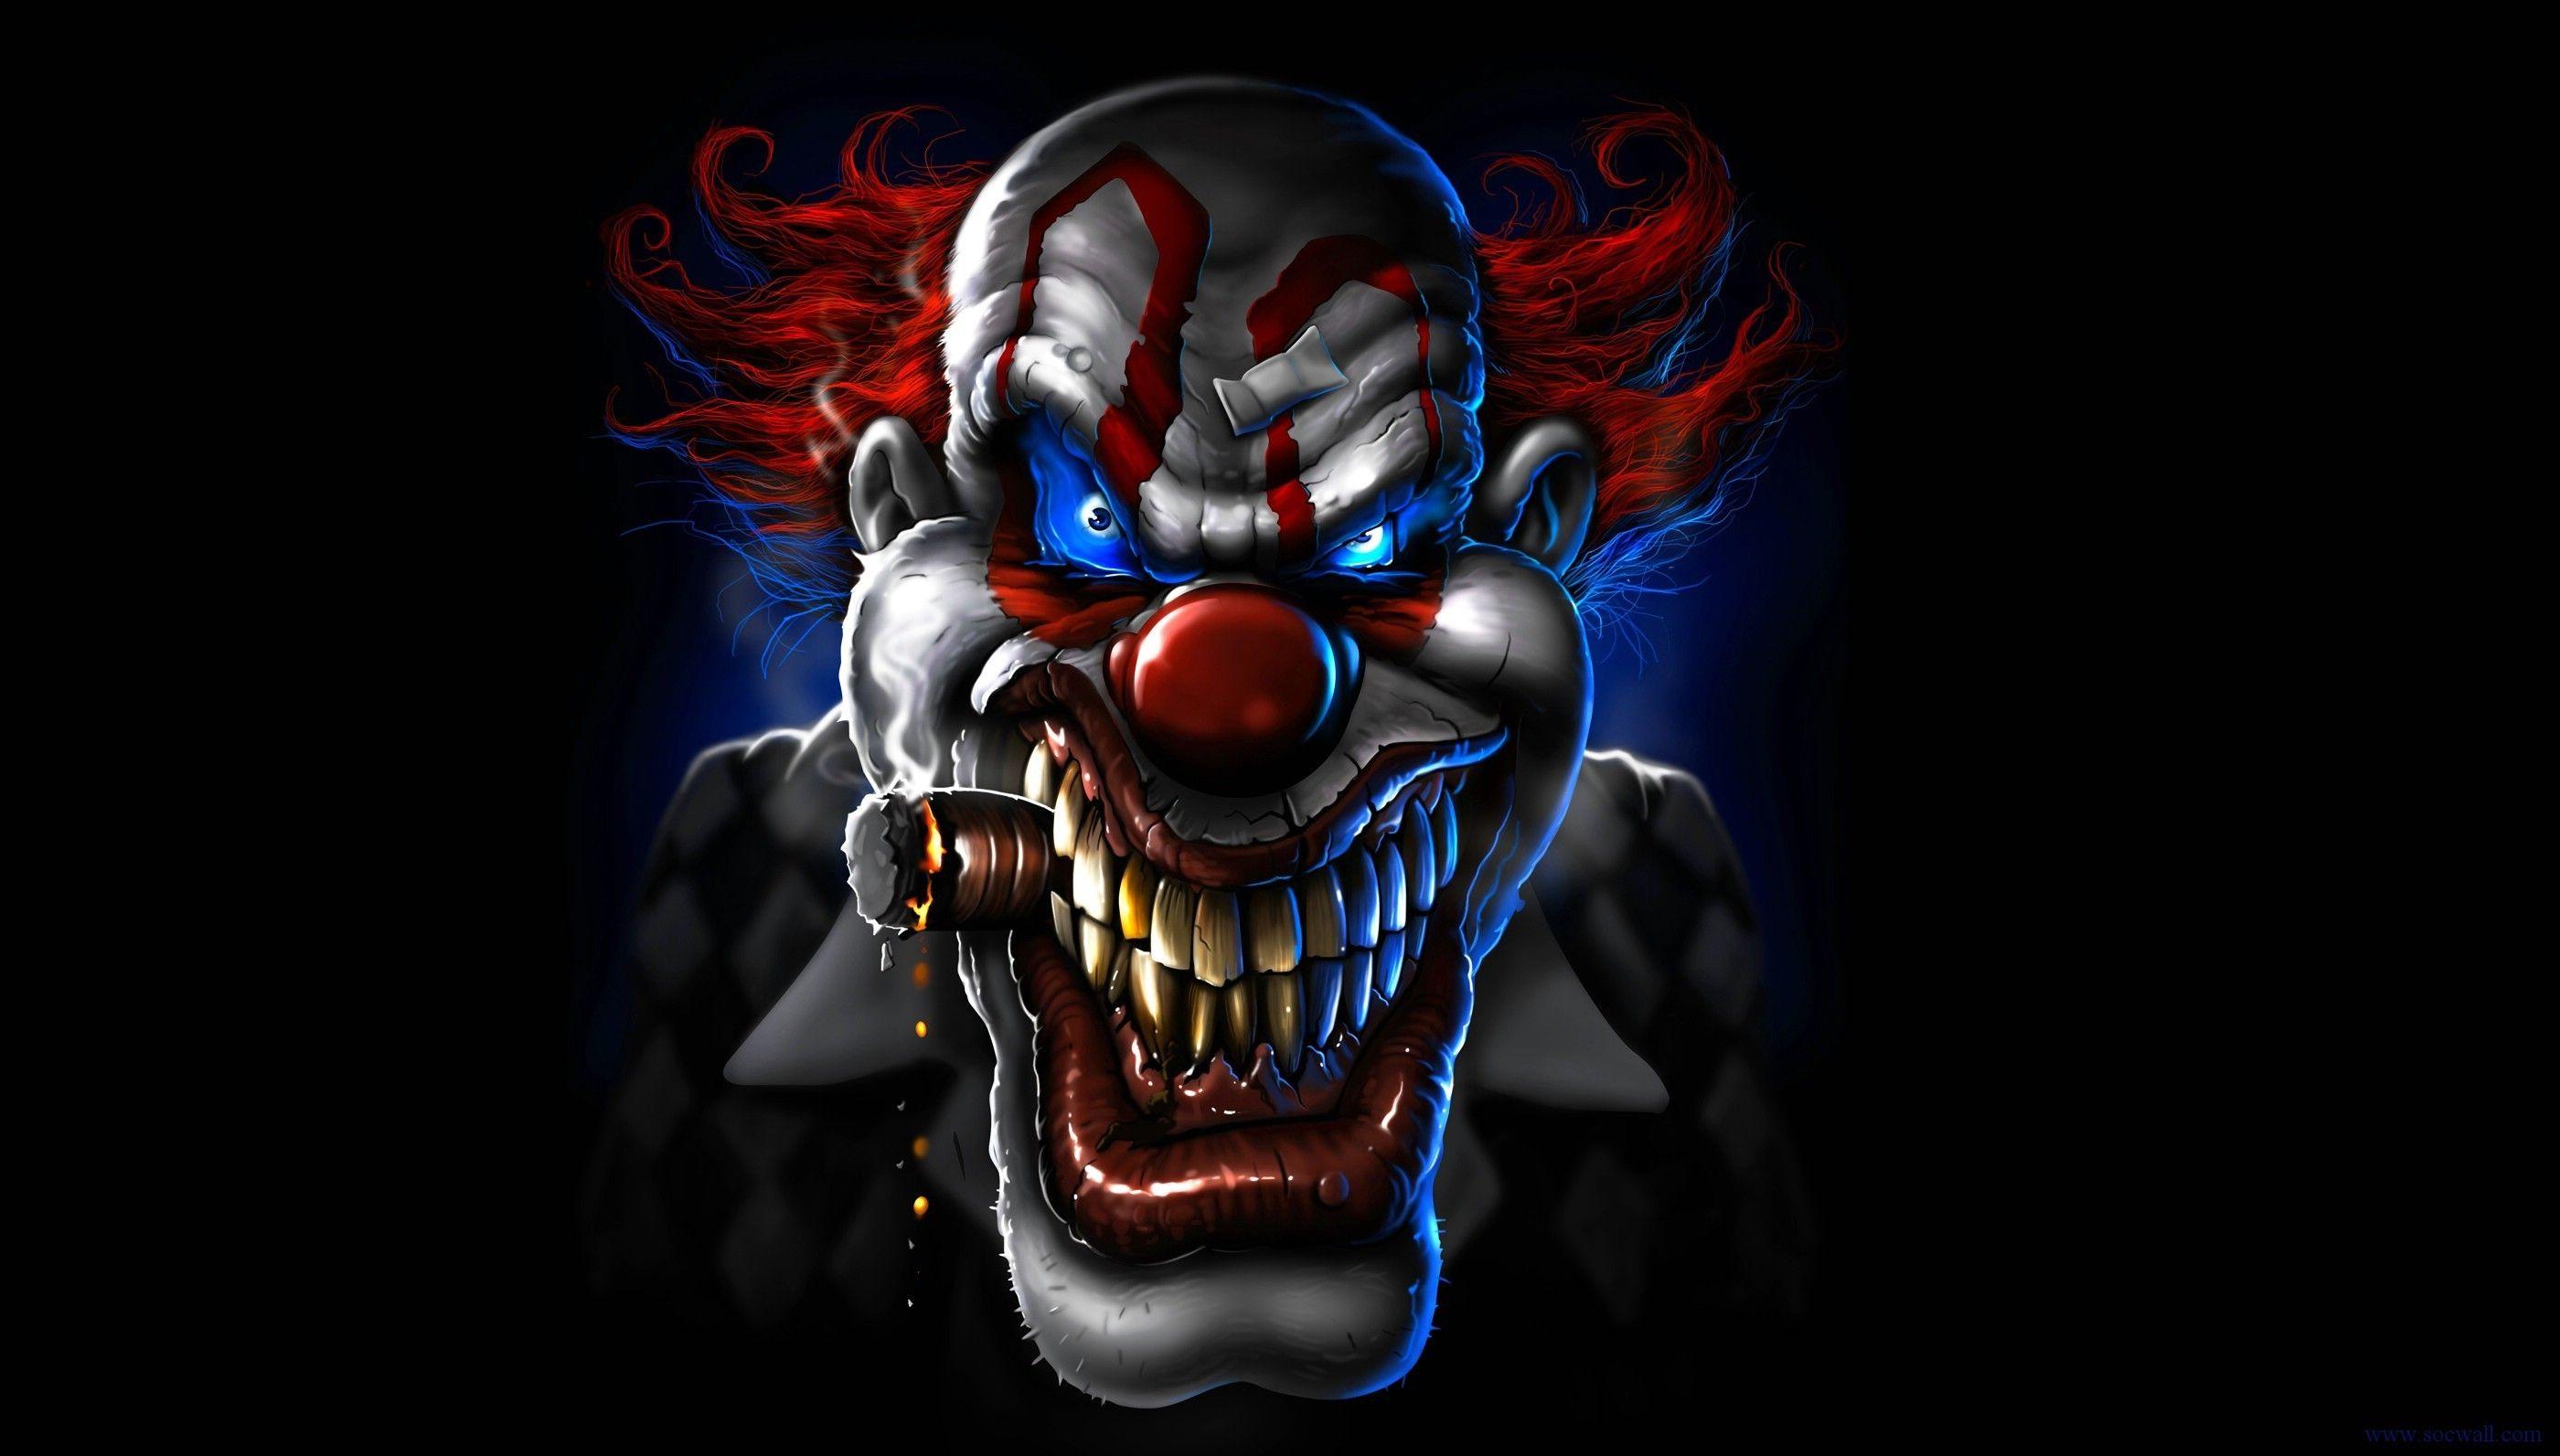 Evil Clown